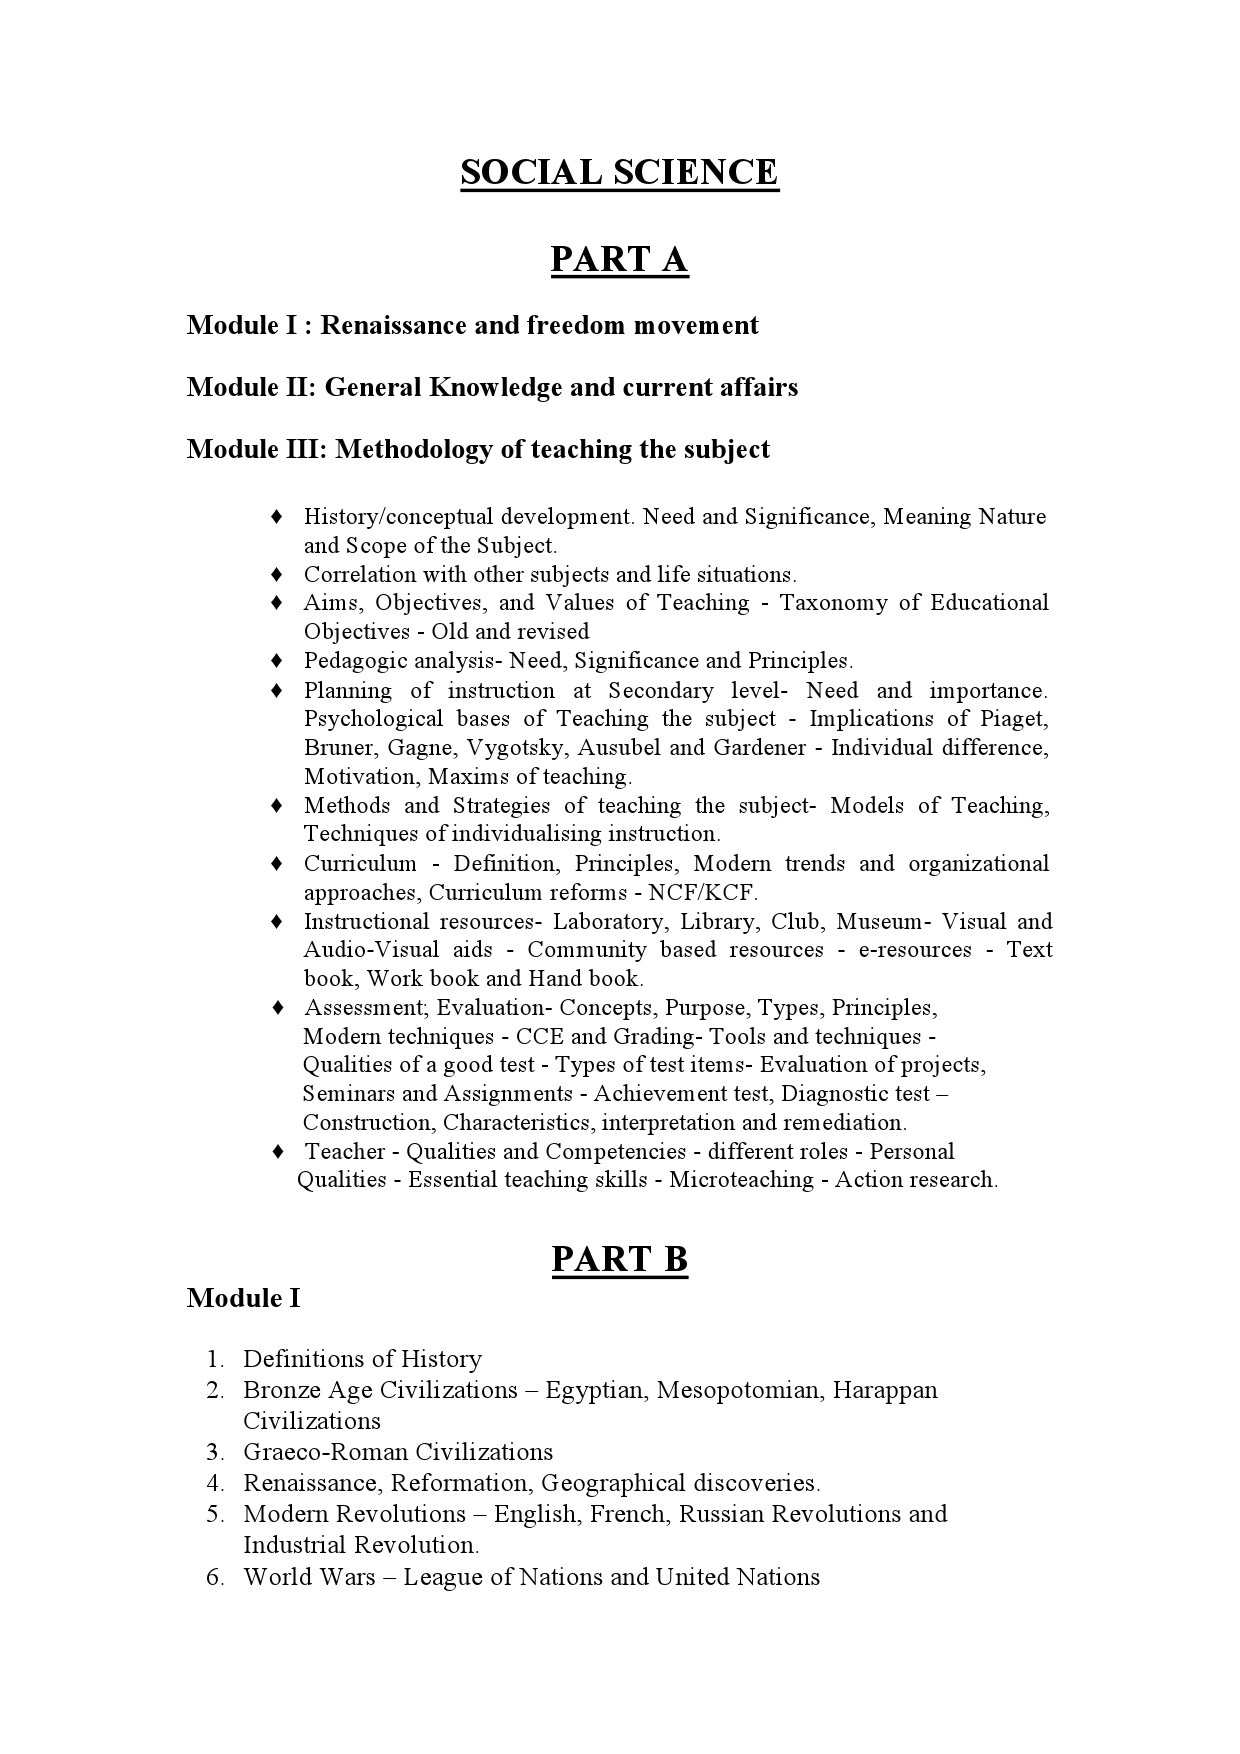 High School Assistant Social Science Part A Kerala Examination Syllabus 2021 - Notification Image 1